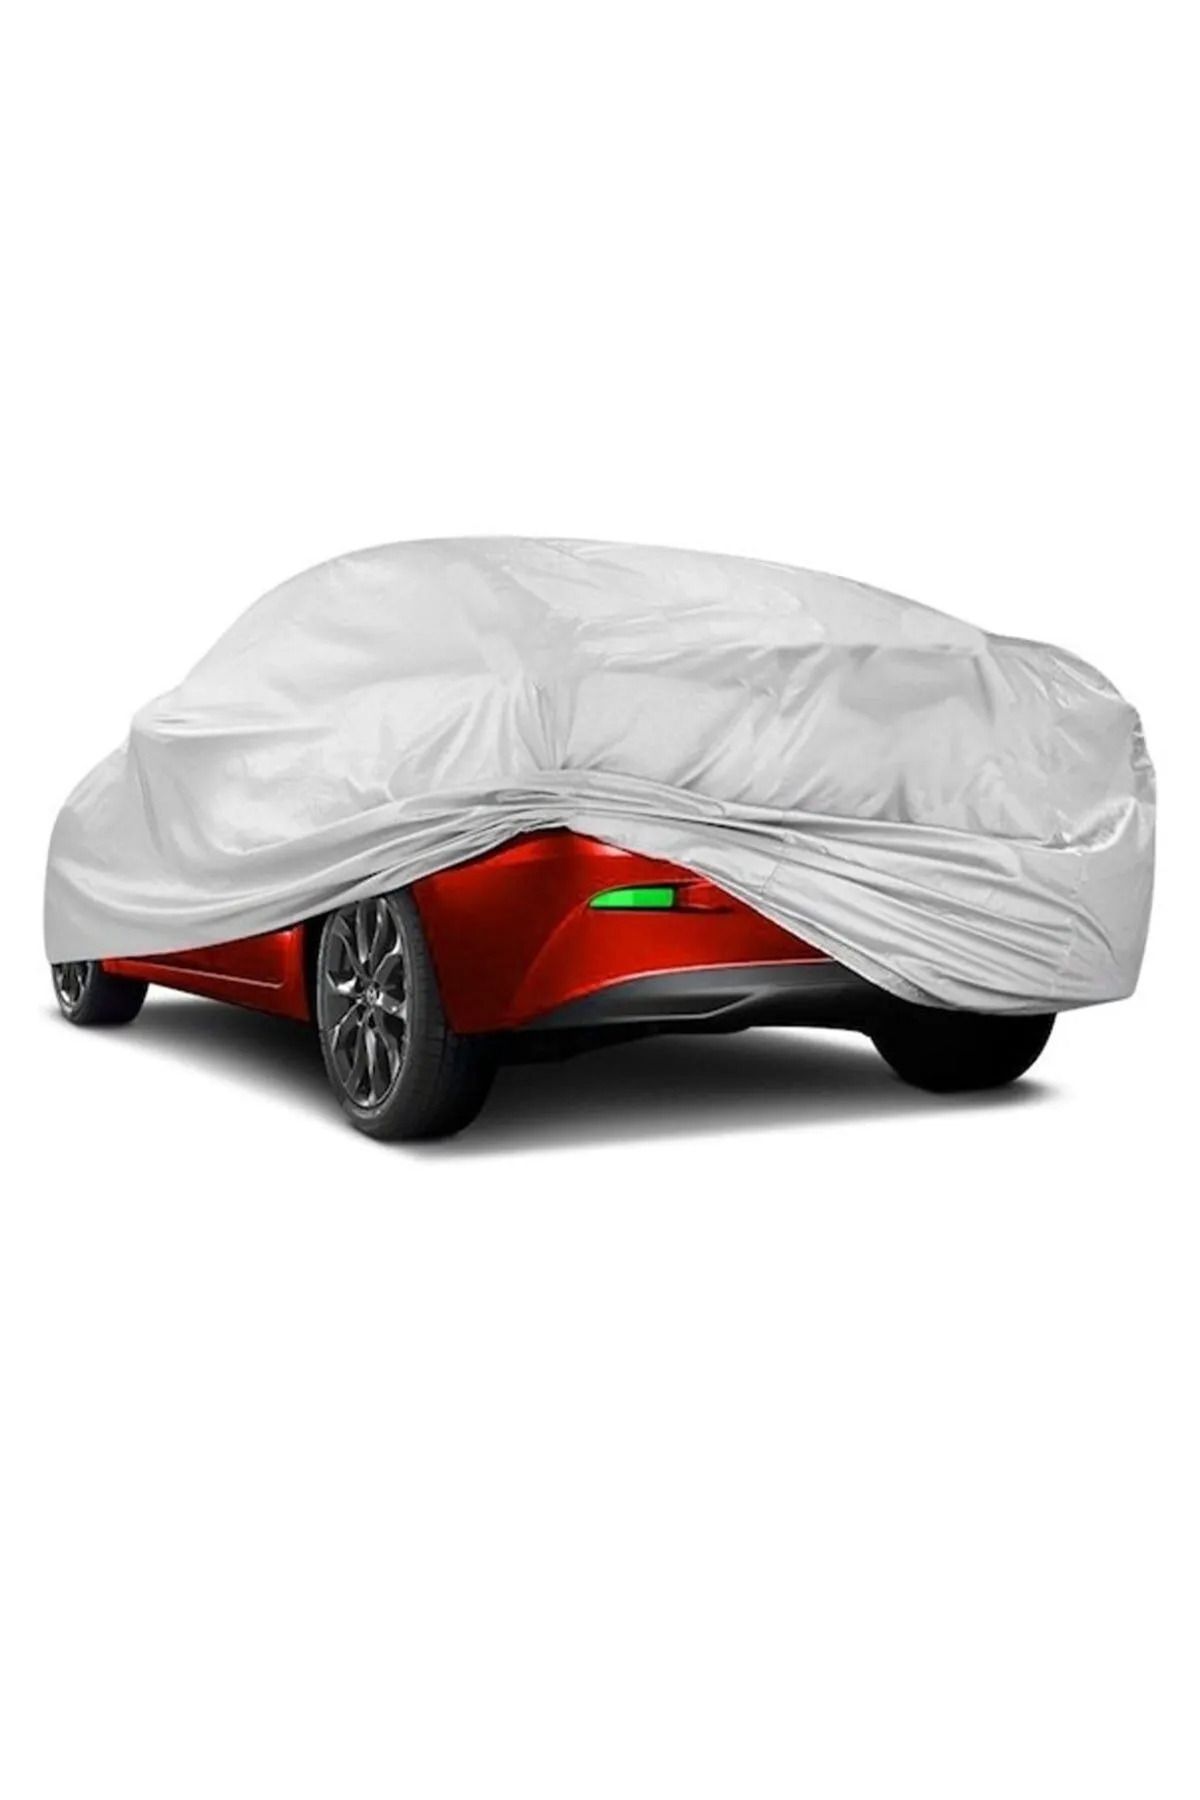 PlusOto Audi Rs3 Compatible Car Tarpaulin, Vehicle Cover, Tent